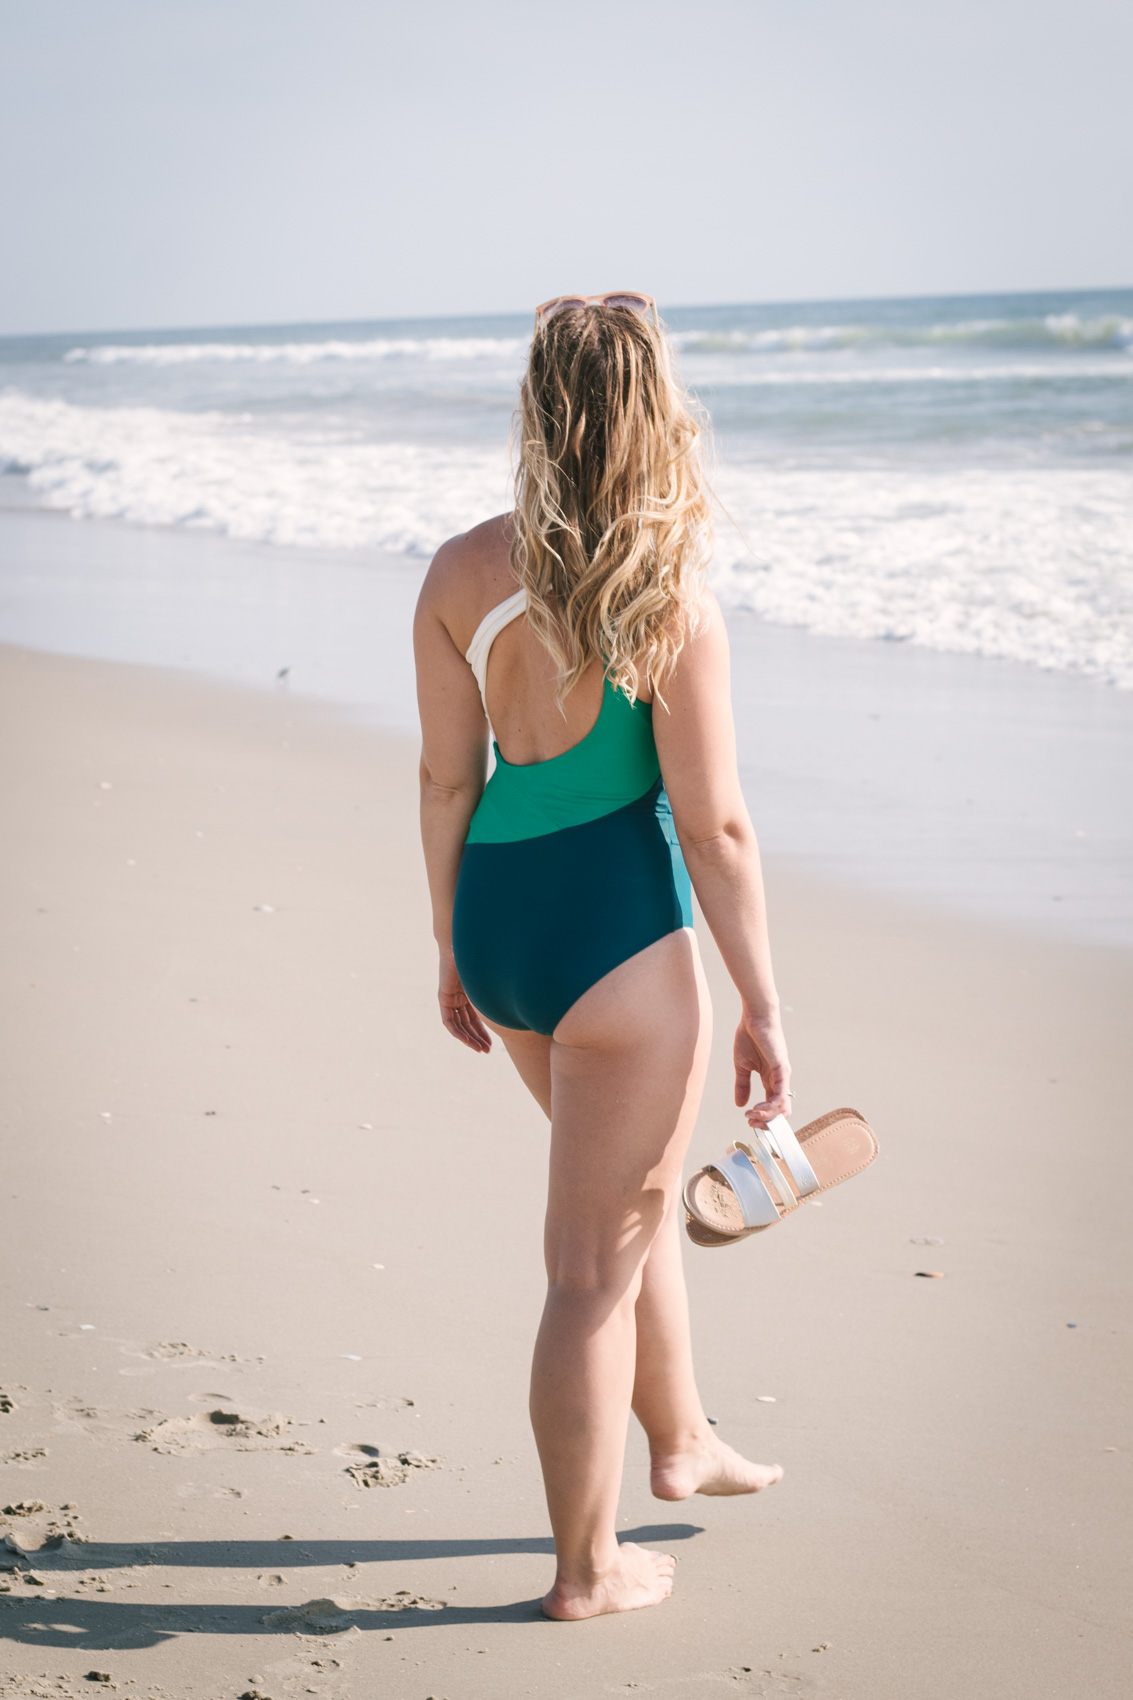 Summersalt Sidestroke Swimsuit Review: Worth It?